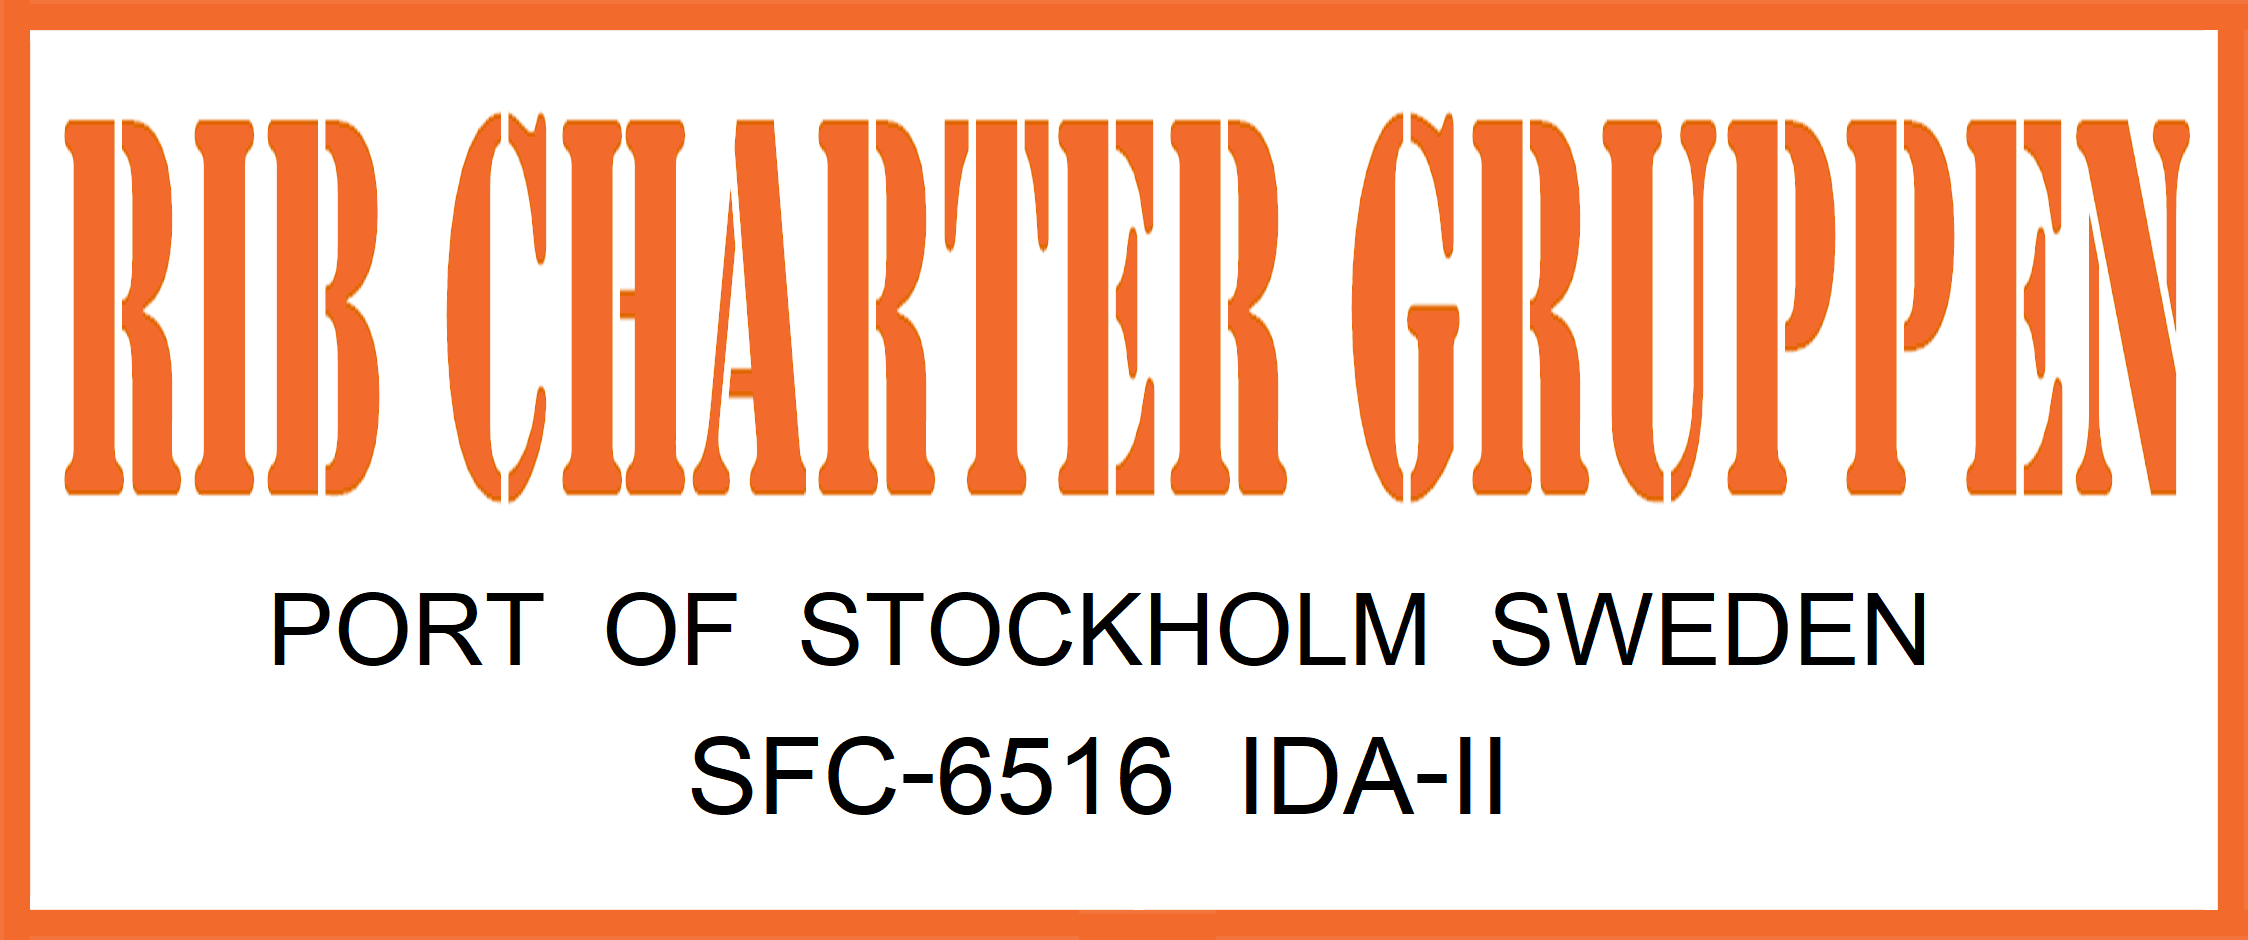 RIB Chartergruppen logo